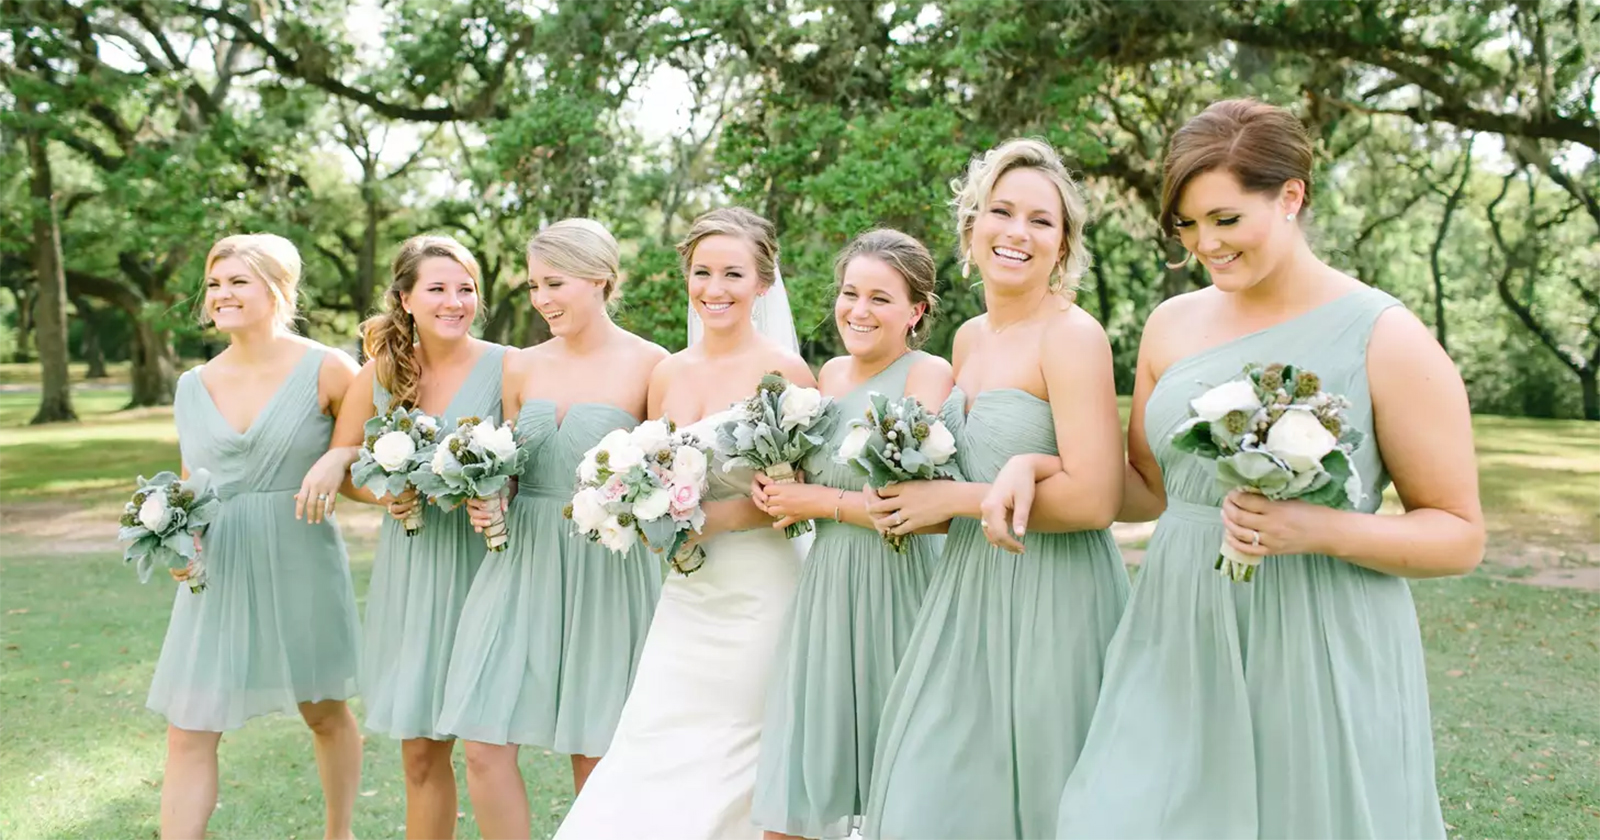 Sage Green Bridesmaid Dresses: 10 Fresh Styles FAQs | vlr.eng.br